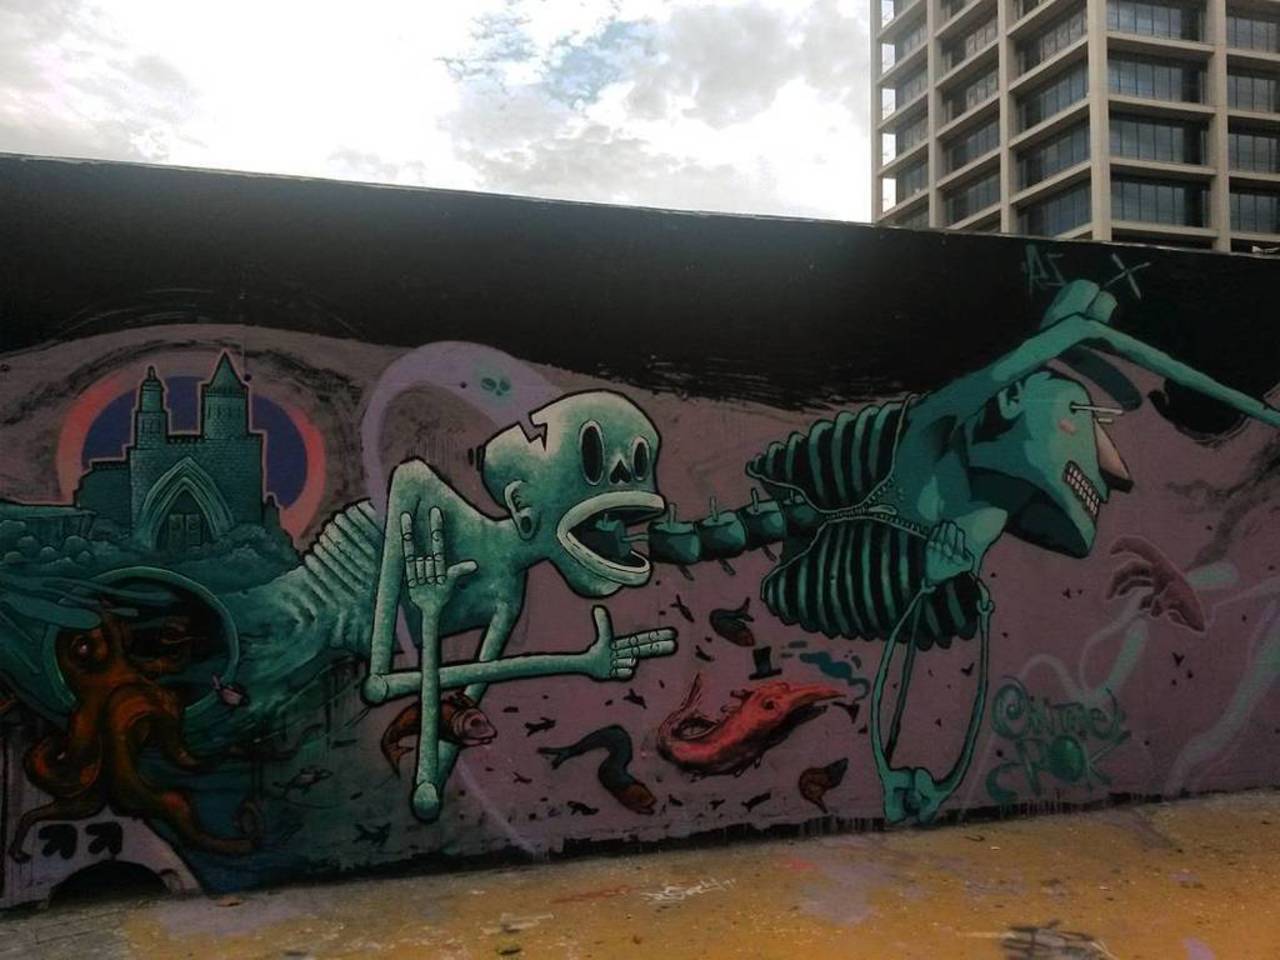 #streetart #onmyway #graffiti #art #arte #urbano #urbanart #efimero #instagraffiti #instaart #instastreetart #barce… http://t.co/U7bX8f7ga8